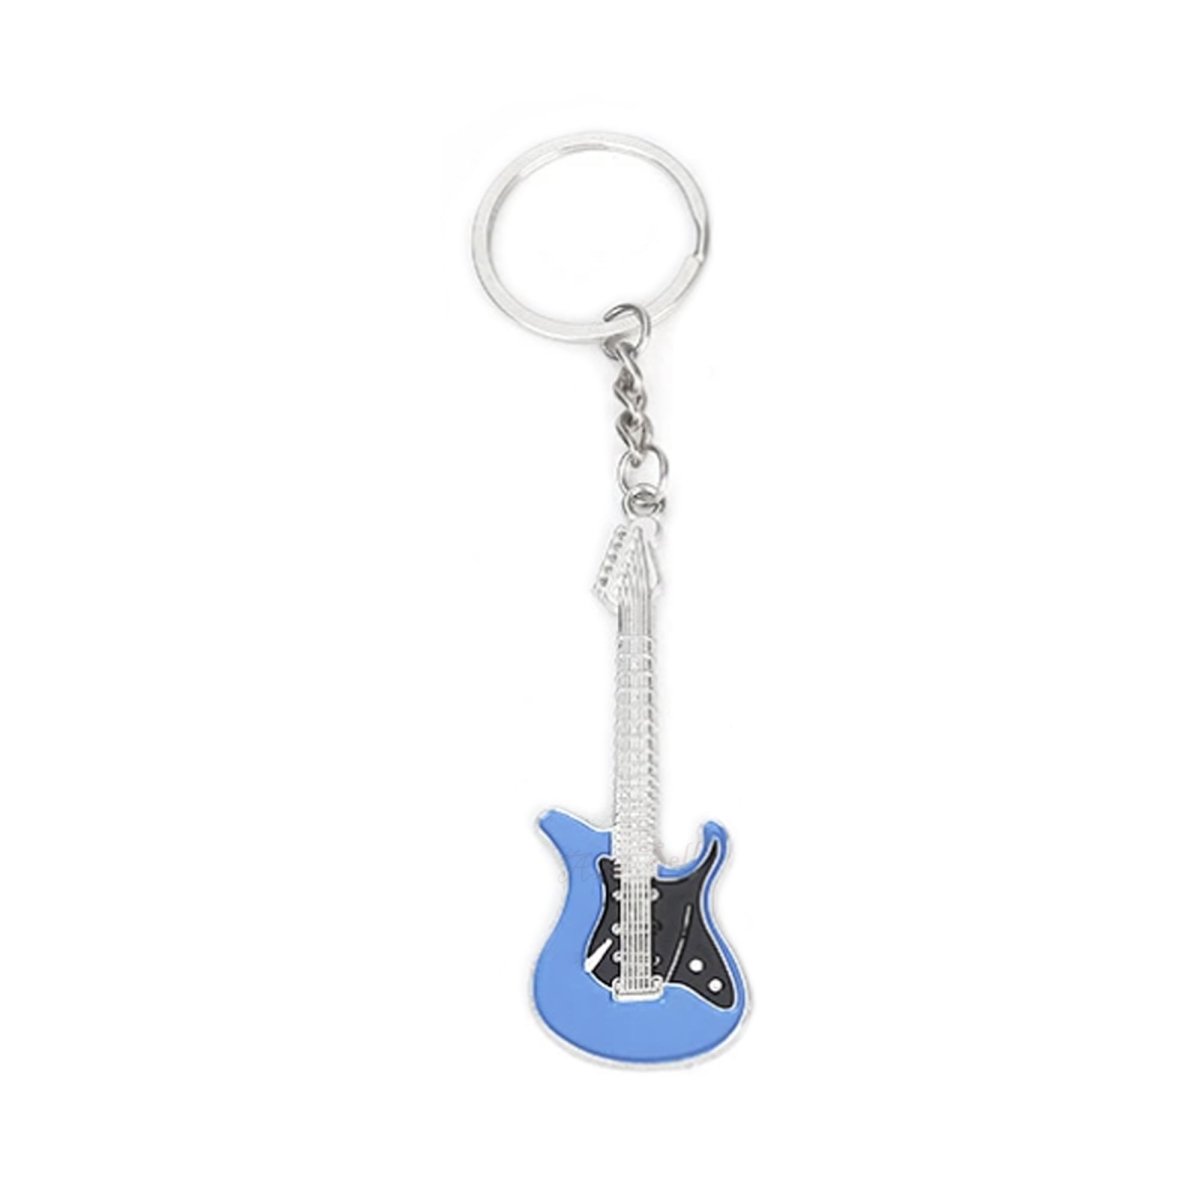 30mm Keyring Guitar Keychain 7.5cm Key Ring Key Chain Bag Accessory Holder Pendant Tag - Blue - - Asia Sell